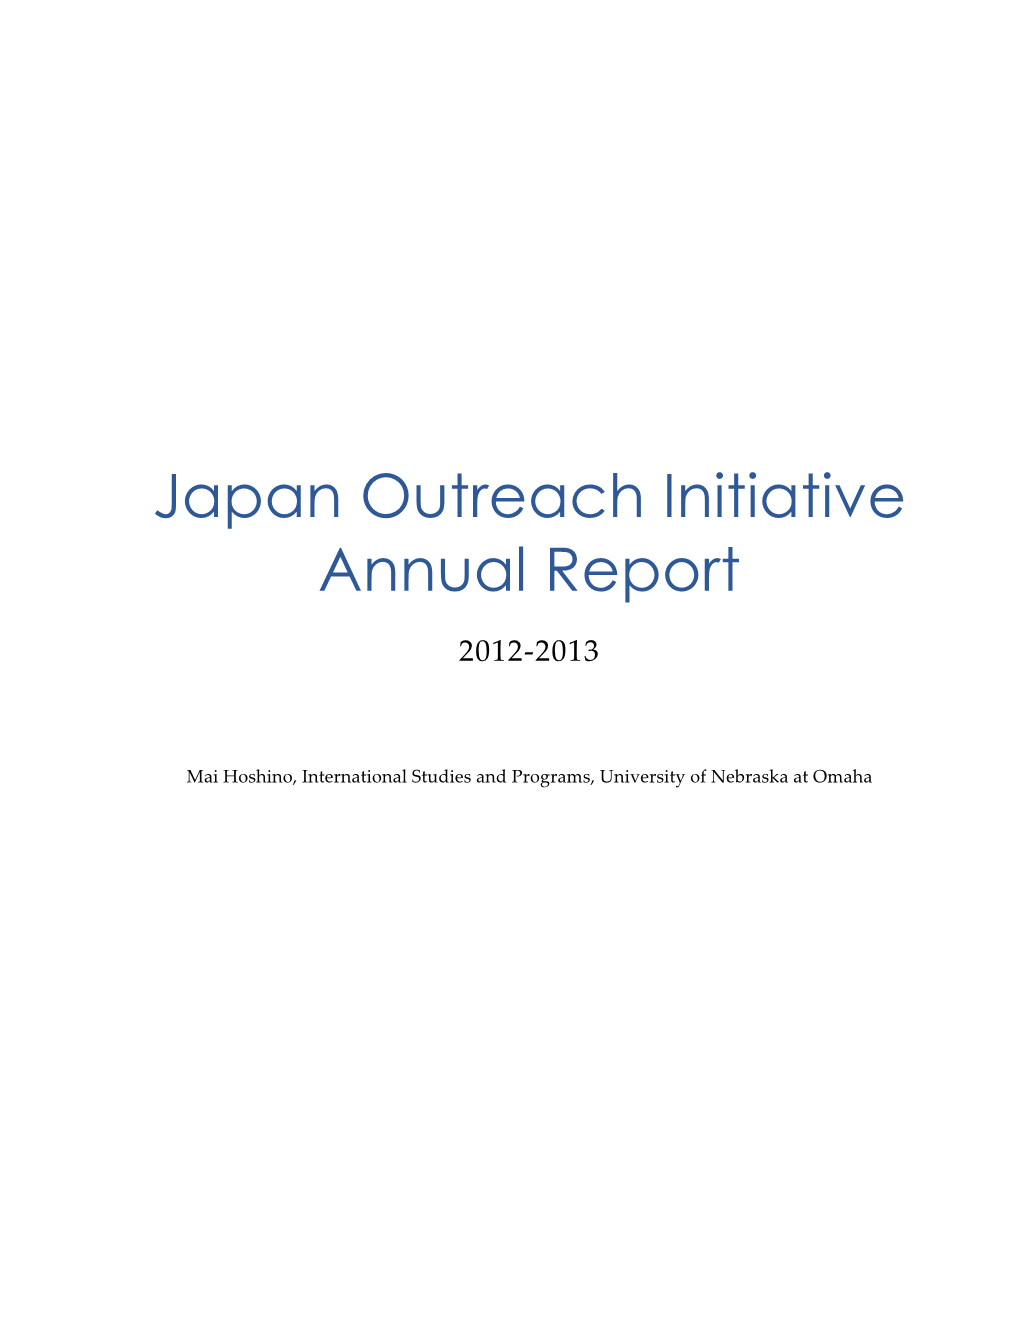 Japan Outreach Initiative Annual Report